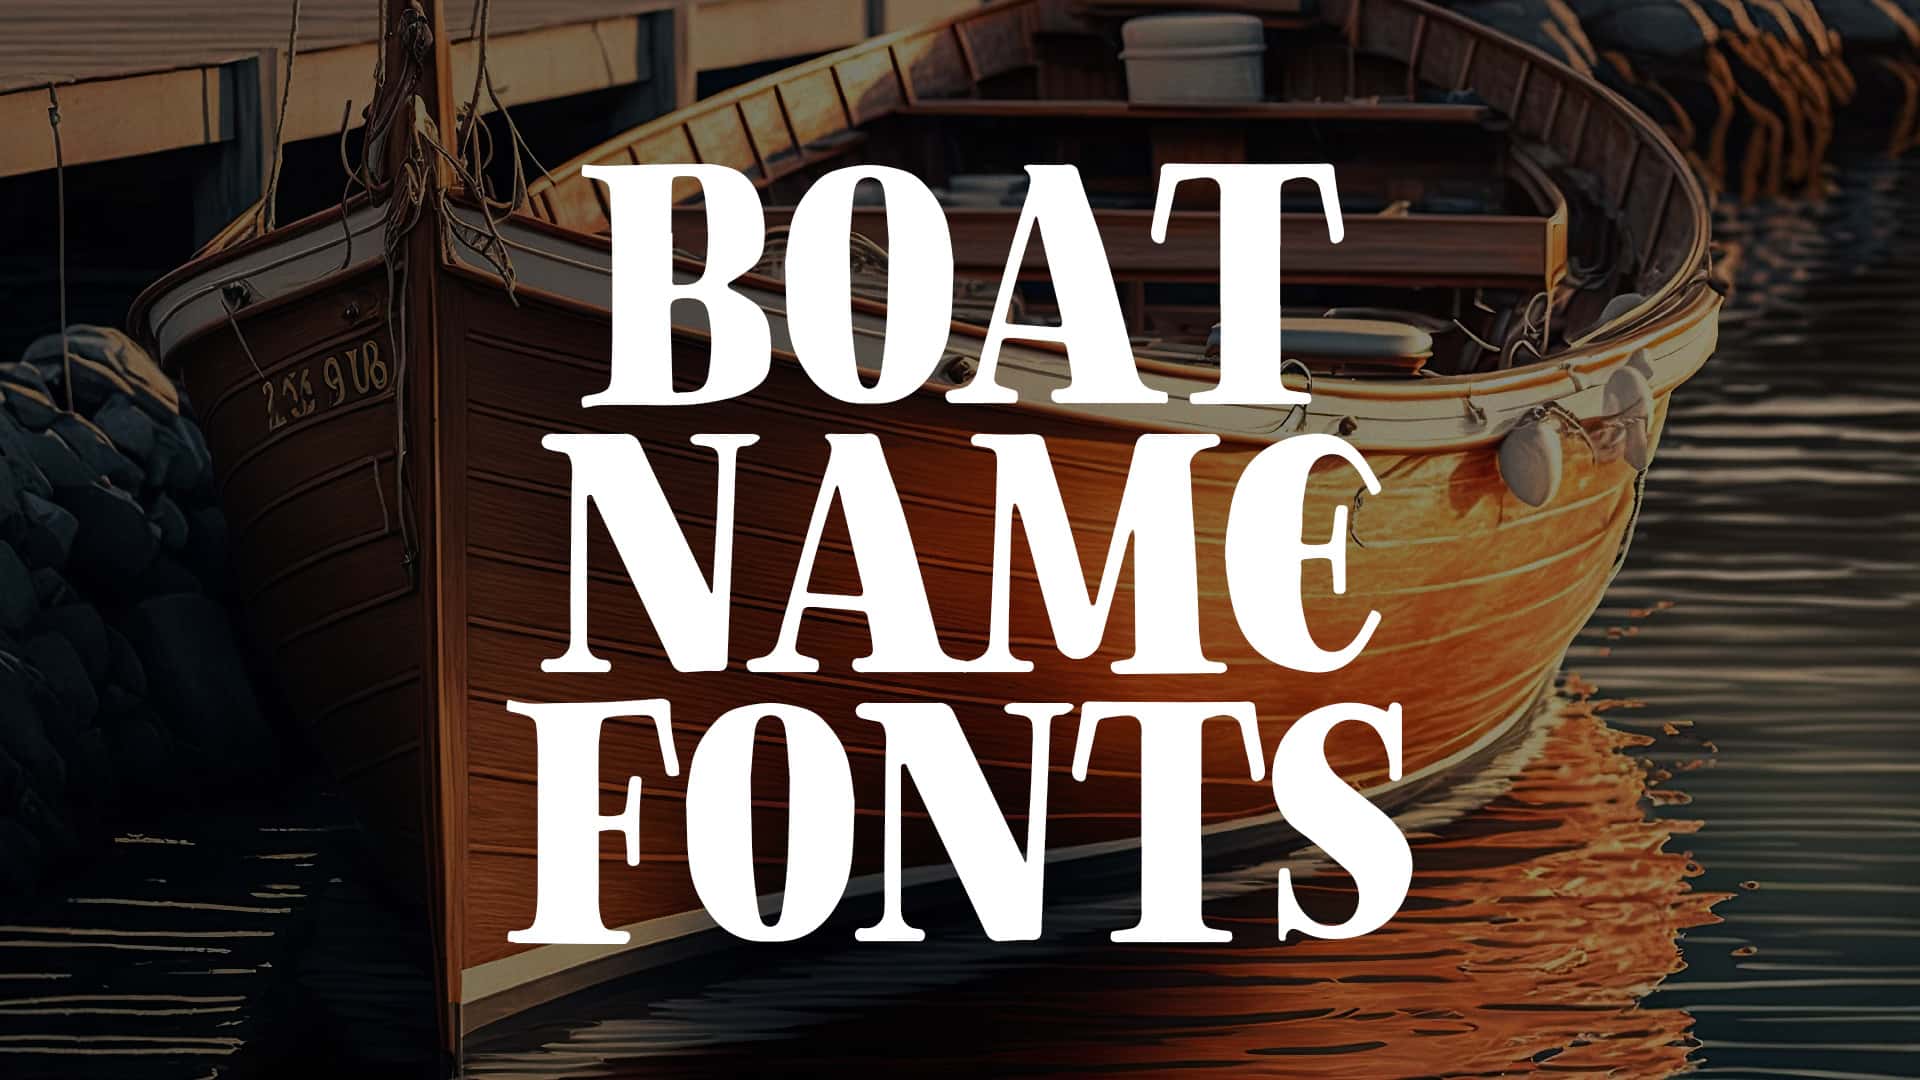 Boat Name Fonts